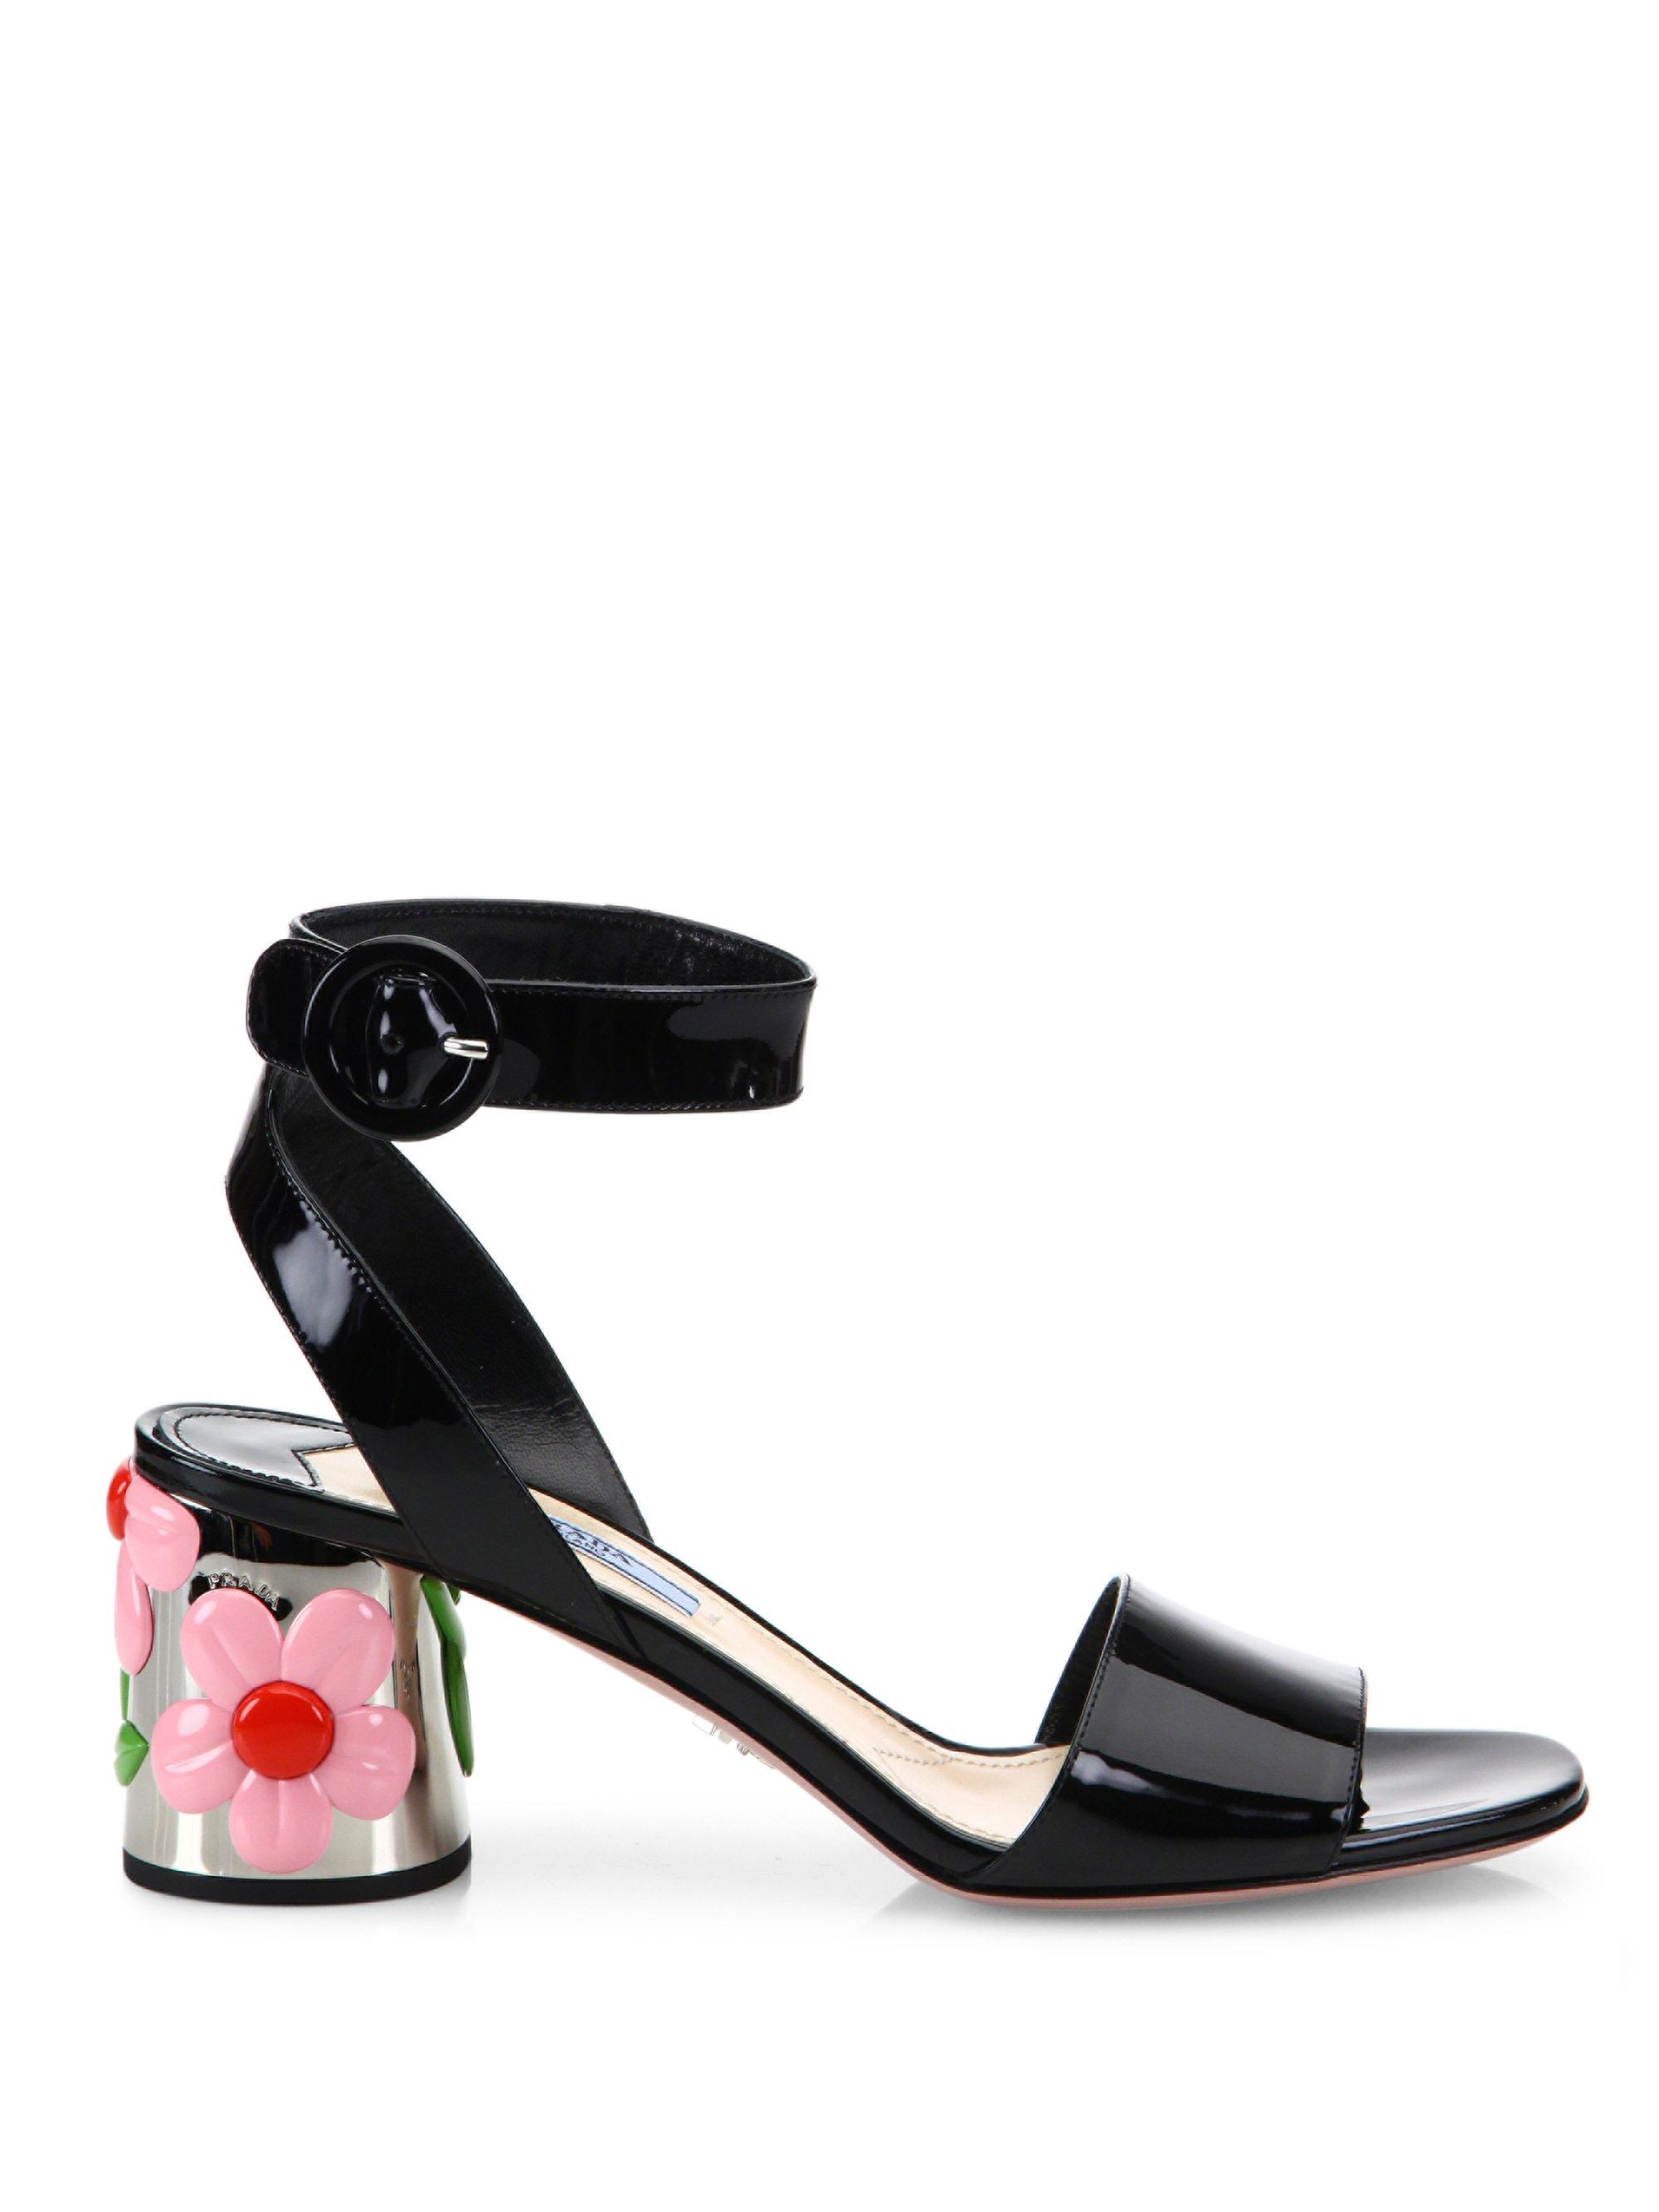 Prada Flower-heel Patent Leather Ankle-strap Sandals in Black | Lyst